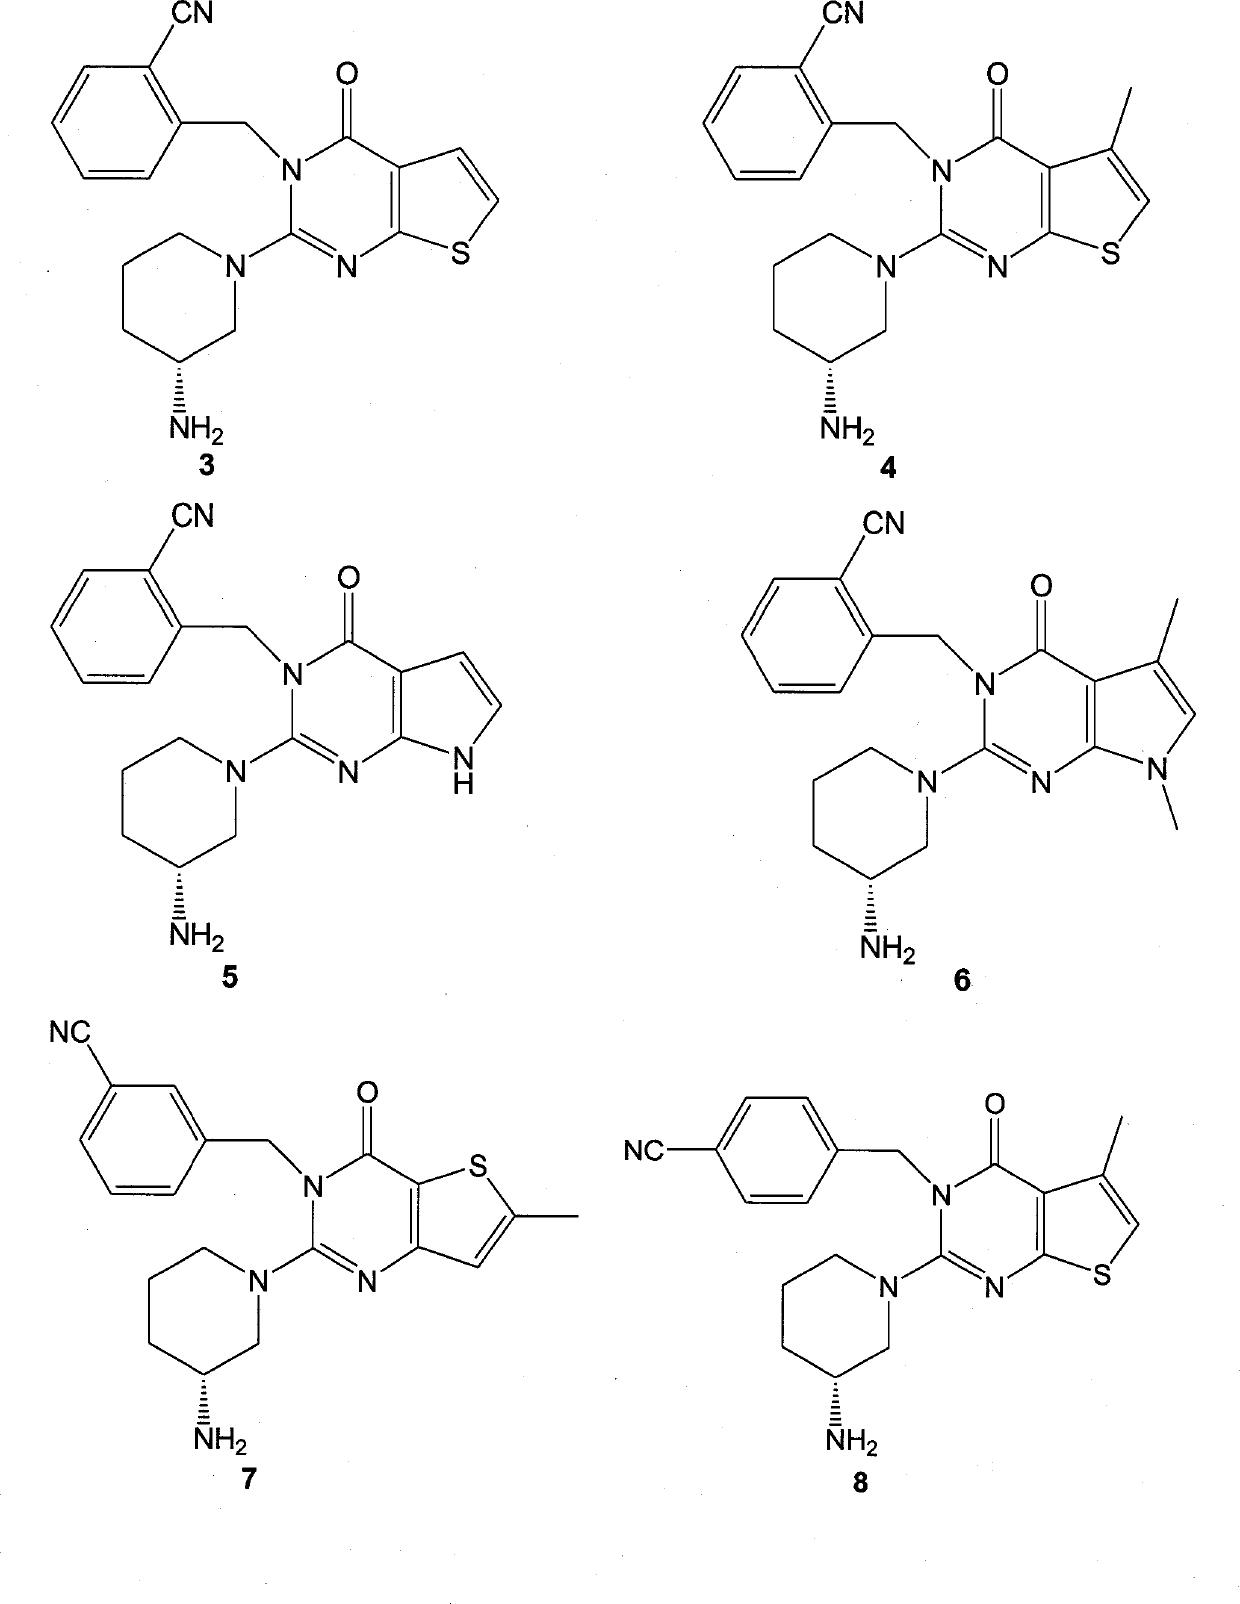 DPP-IV inhibitor